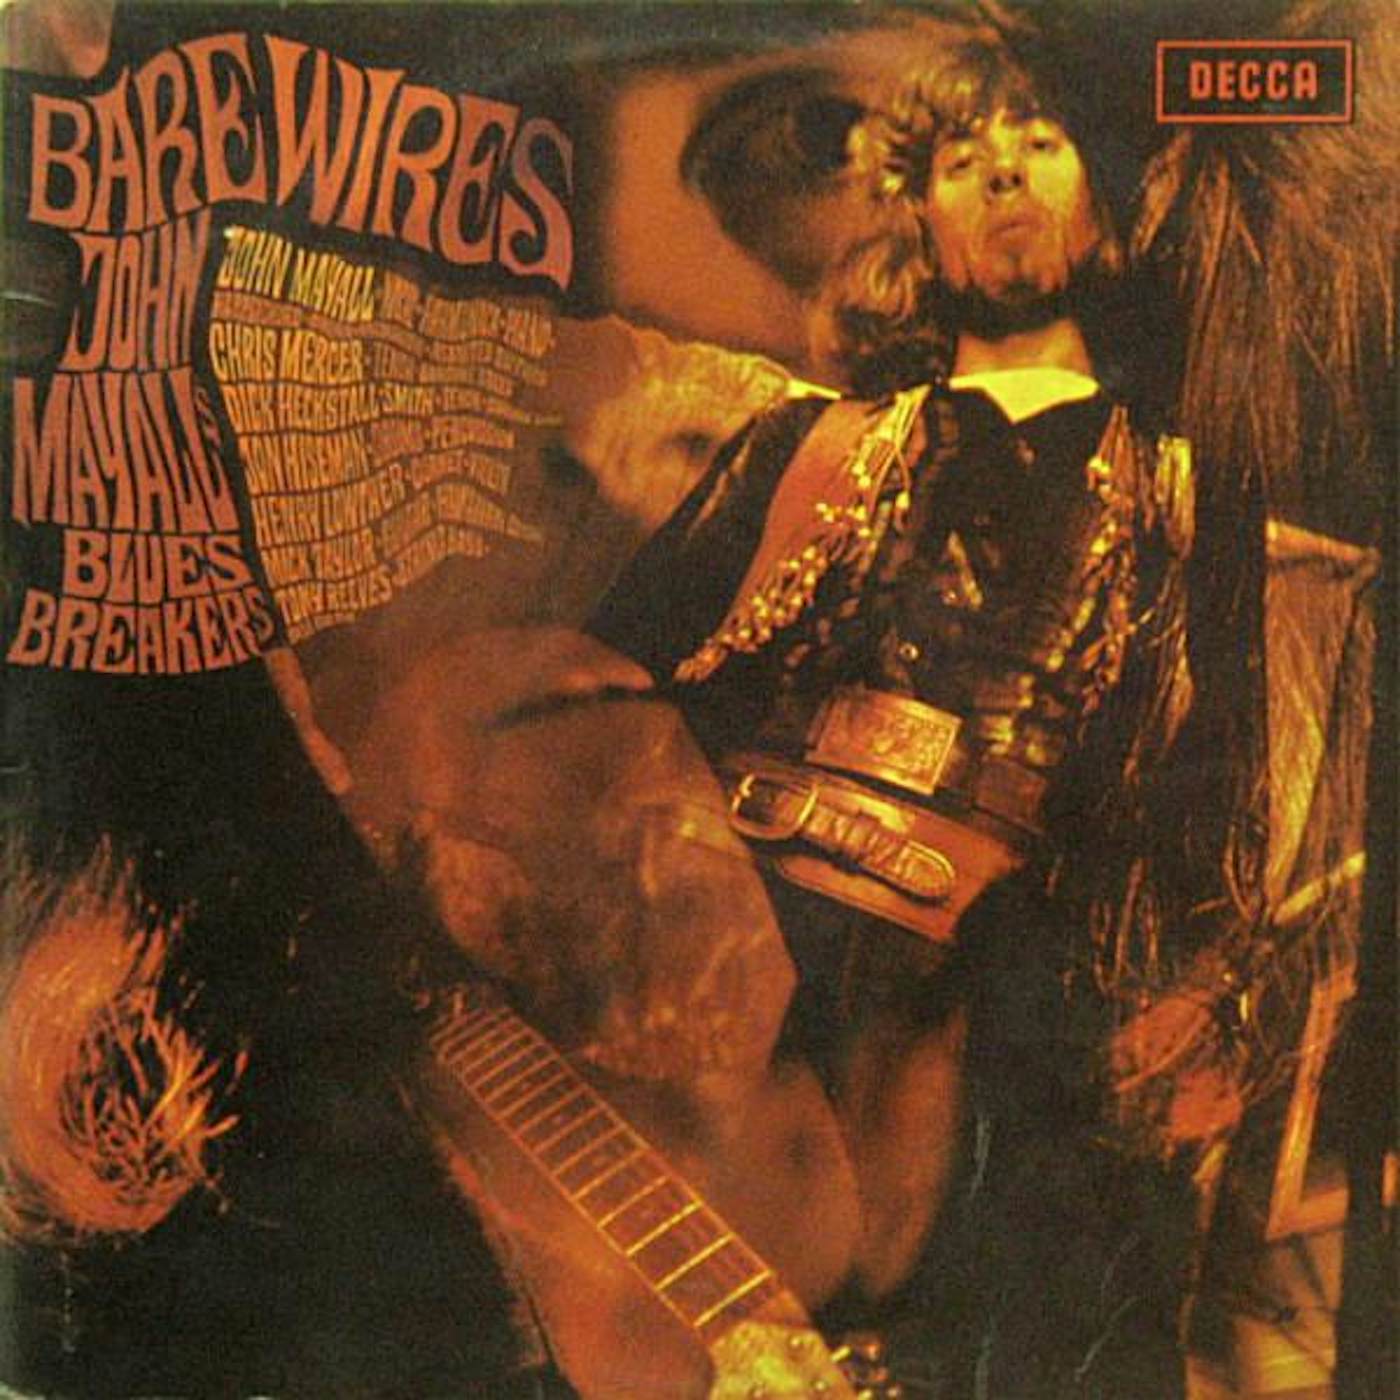 John Mayall & The Bluesbreakers BARE WIRES Vinyl Record